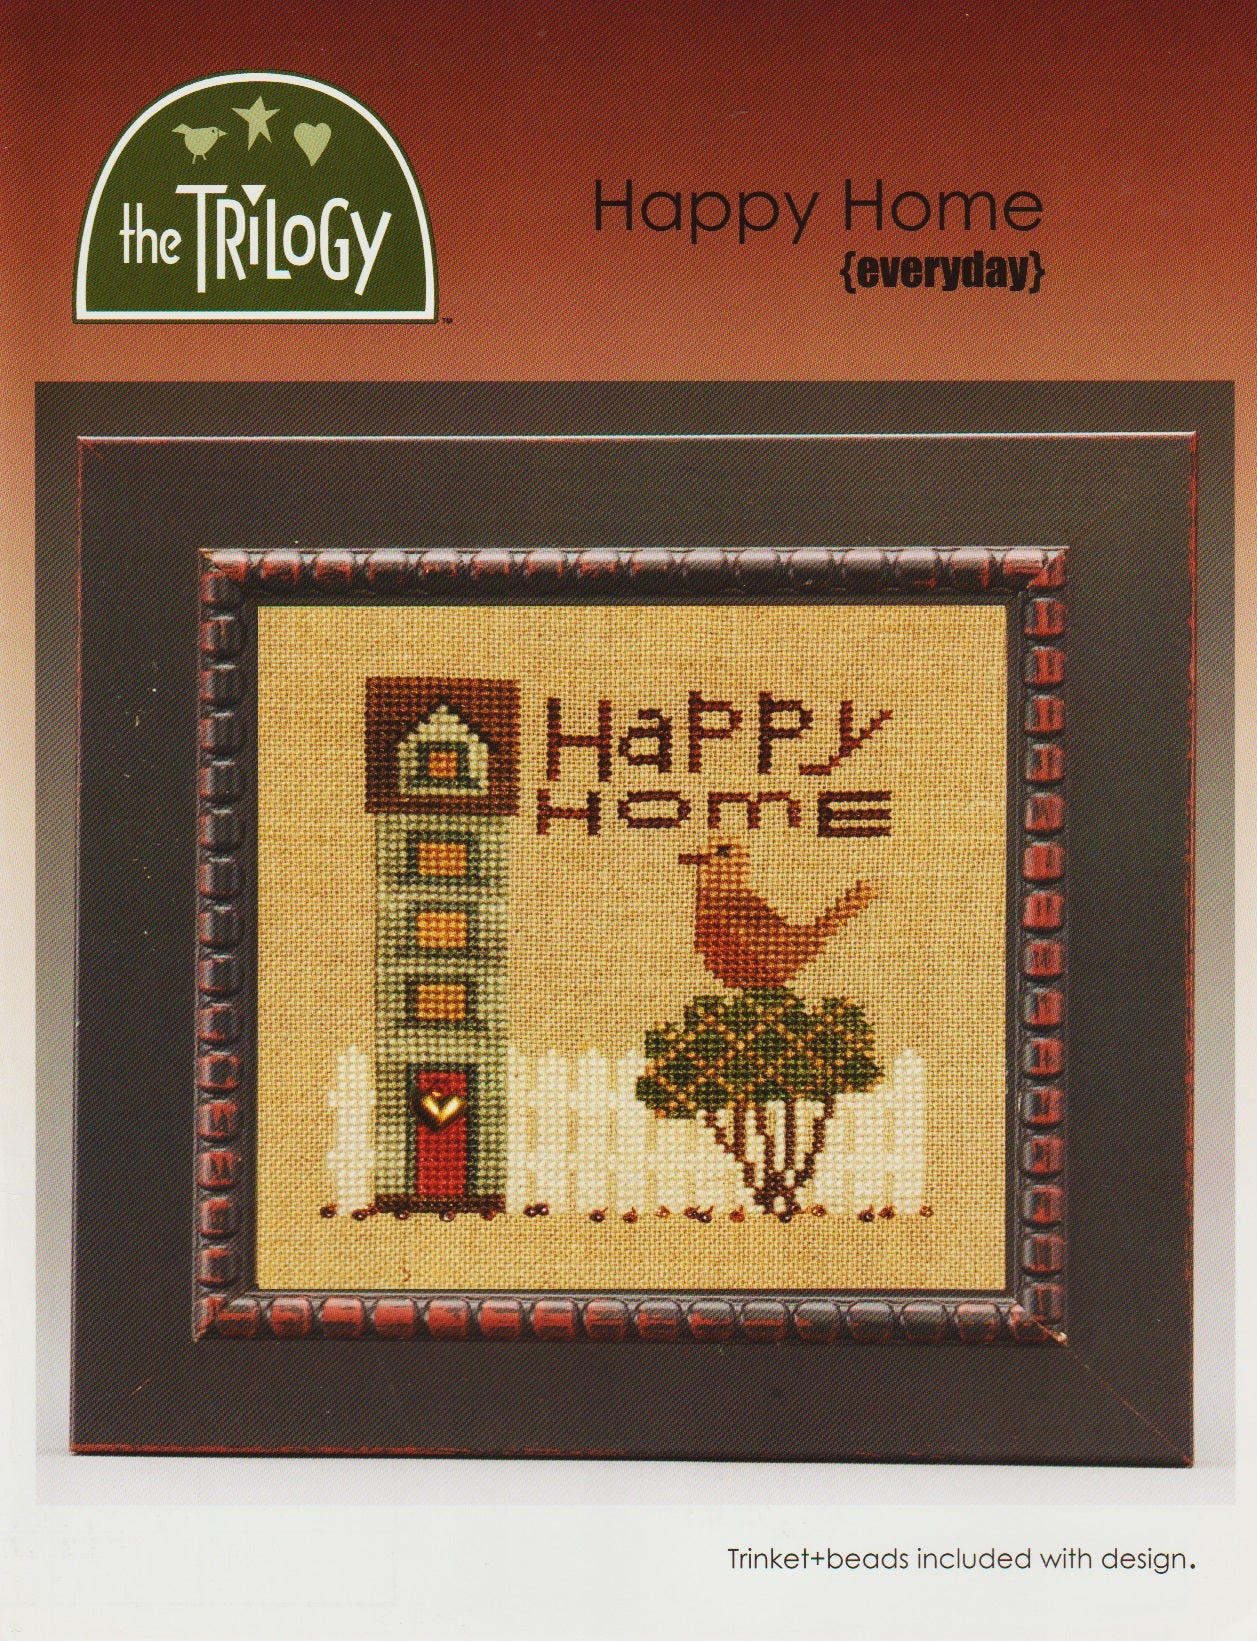 Trilogy Happy Home everyday bird cross stitch pattern